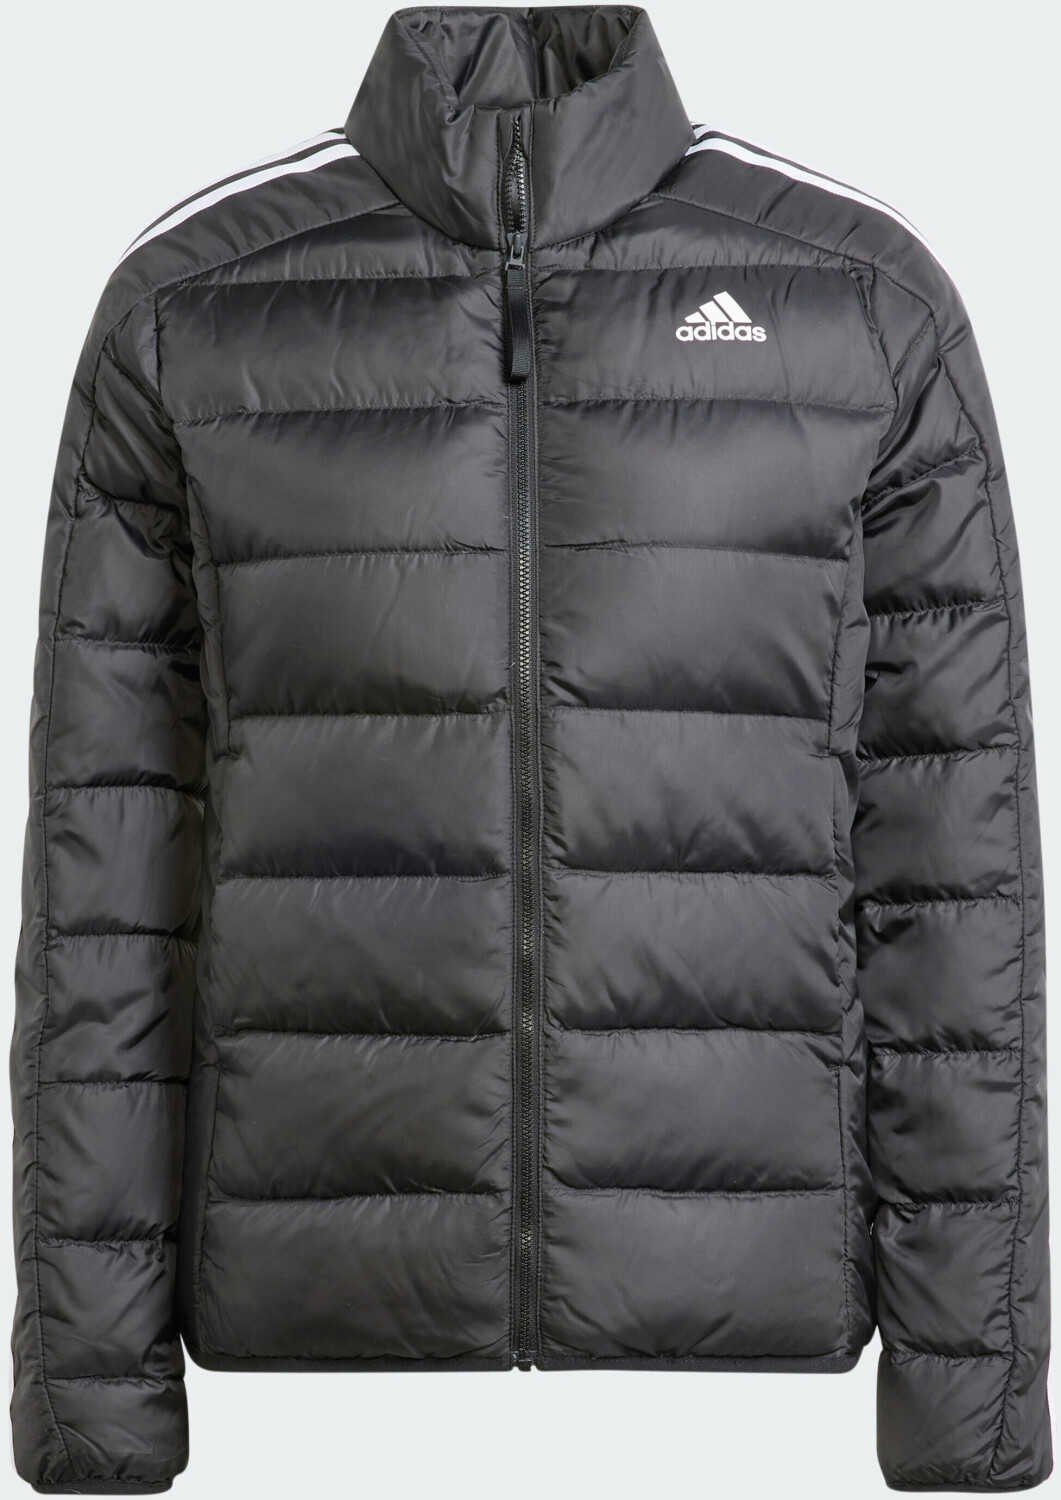 € Light 3-Stripes Essentials Jacket Down ab (HZ5726) 82,39 | Preisvergleich black Adidas bei Woman